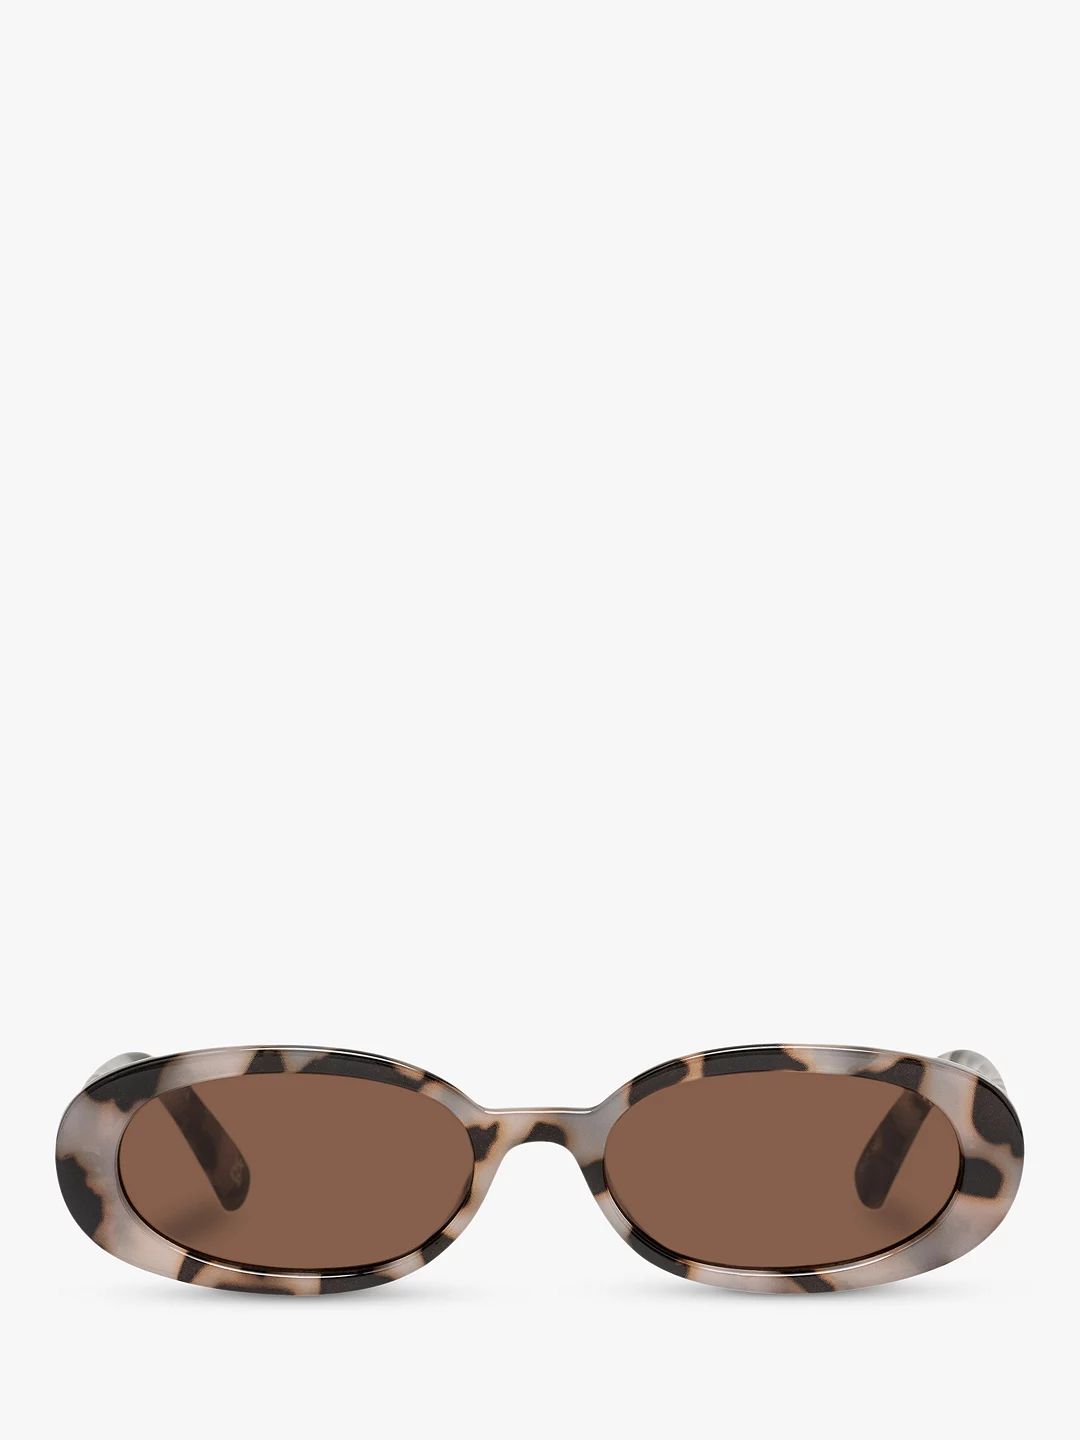 Le Specs L5000176 Women's Outta Love Oval Sunglasses, Tortoise/Brown | John Lewis (UK)